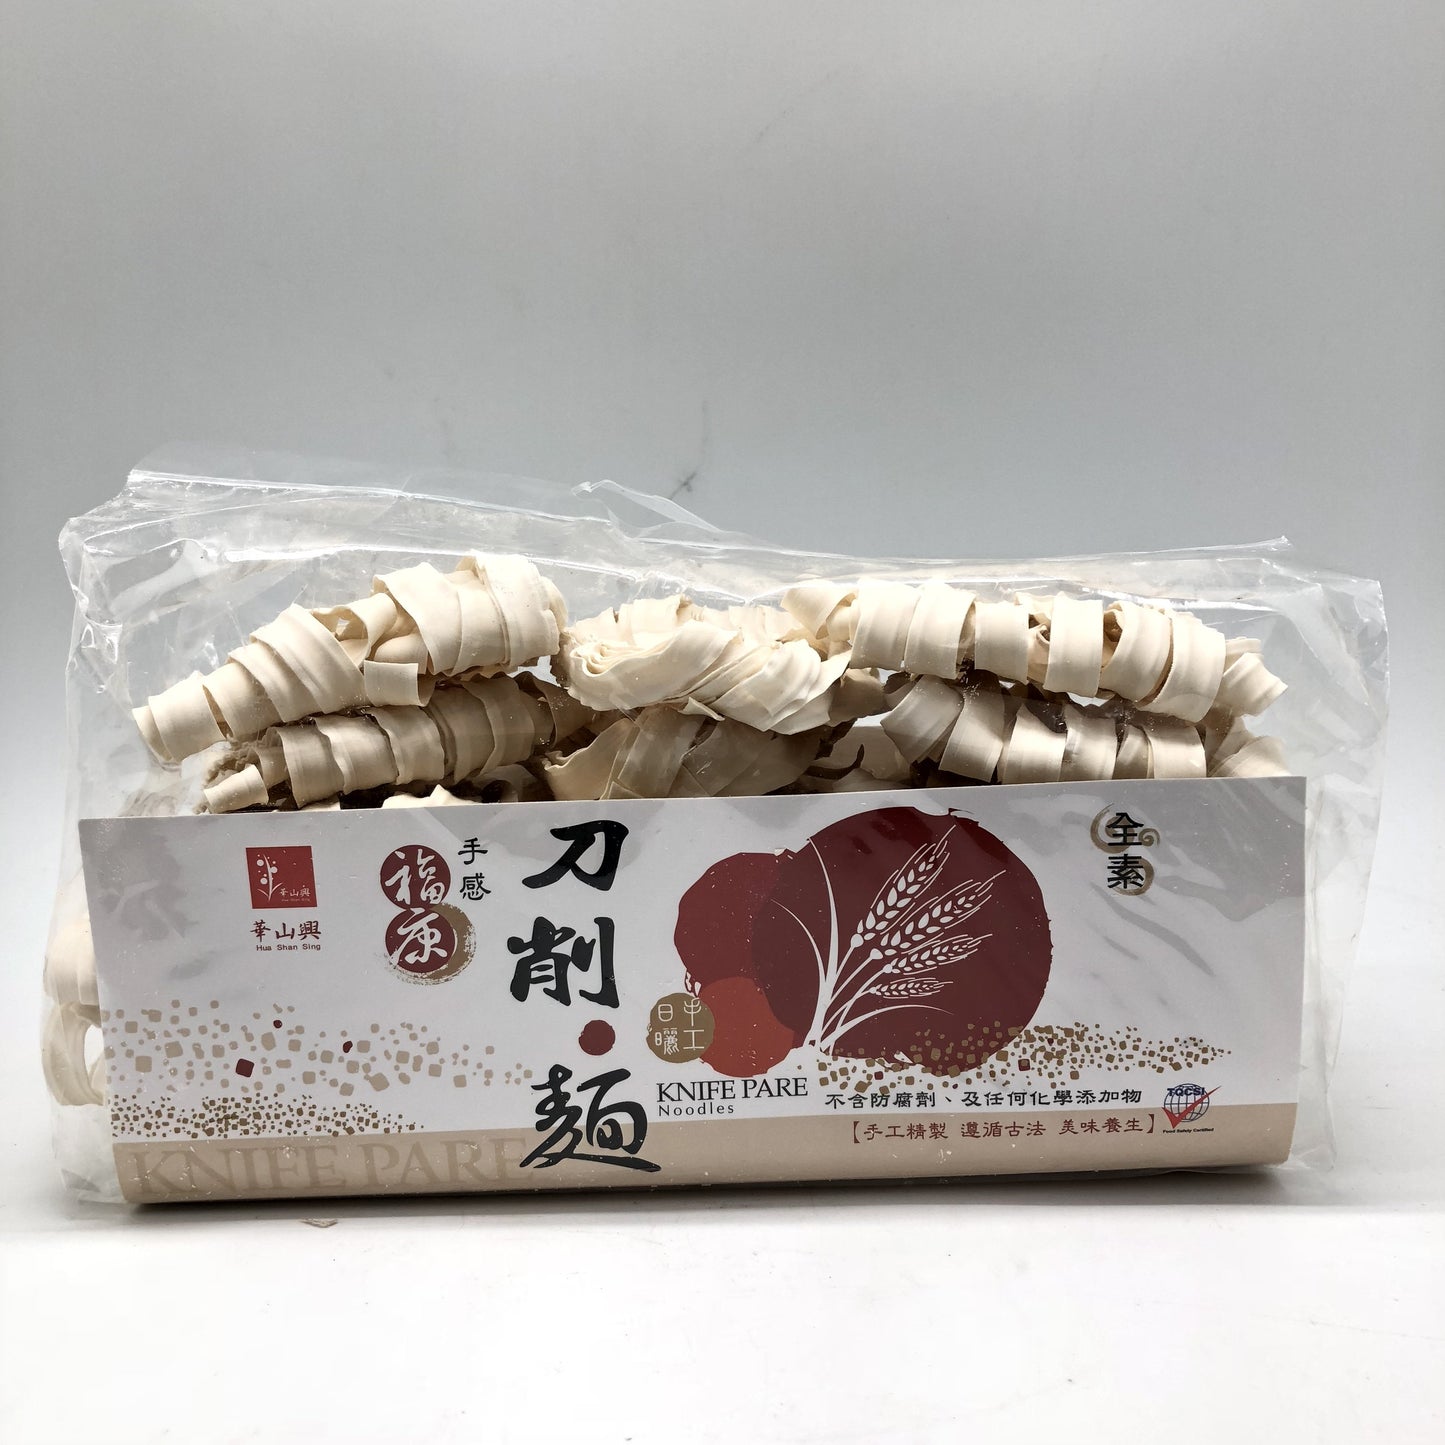 N014TK Hua Shan Sing Brand - Knife Pare Dried Noodles 900kg - 12 bags / 1CTN - New Eastland Pty Ltd - Asian food wholesalers